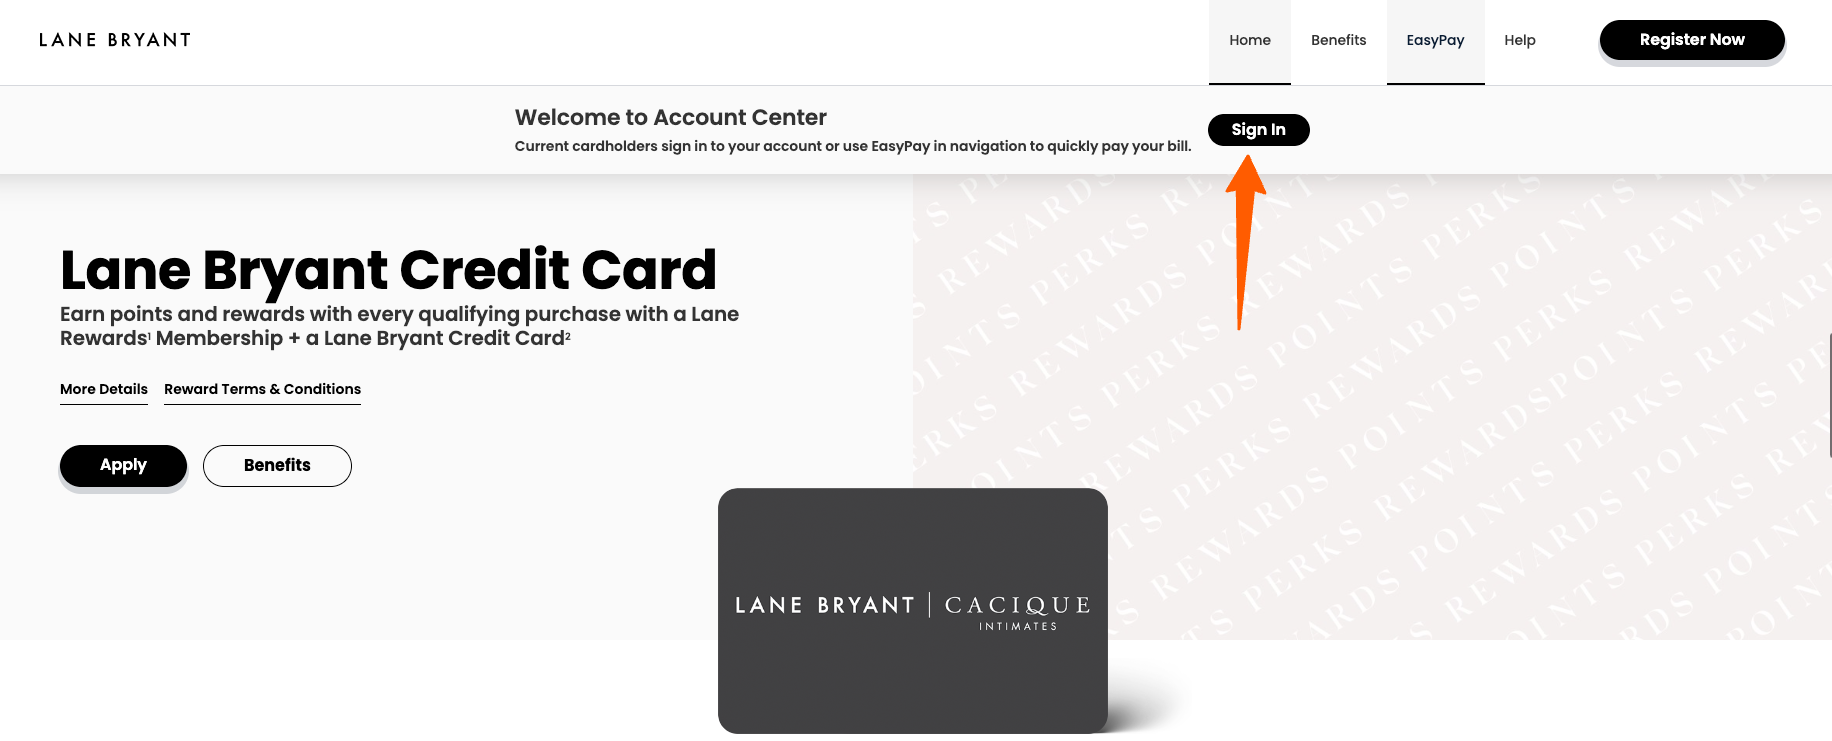 Lane Bryant Credit Card login